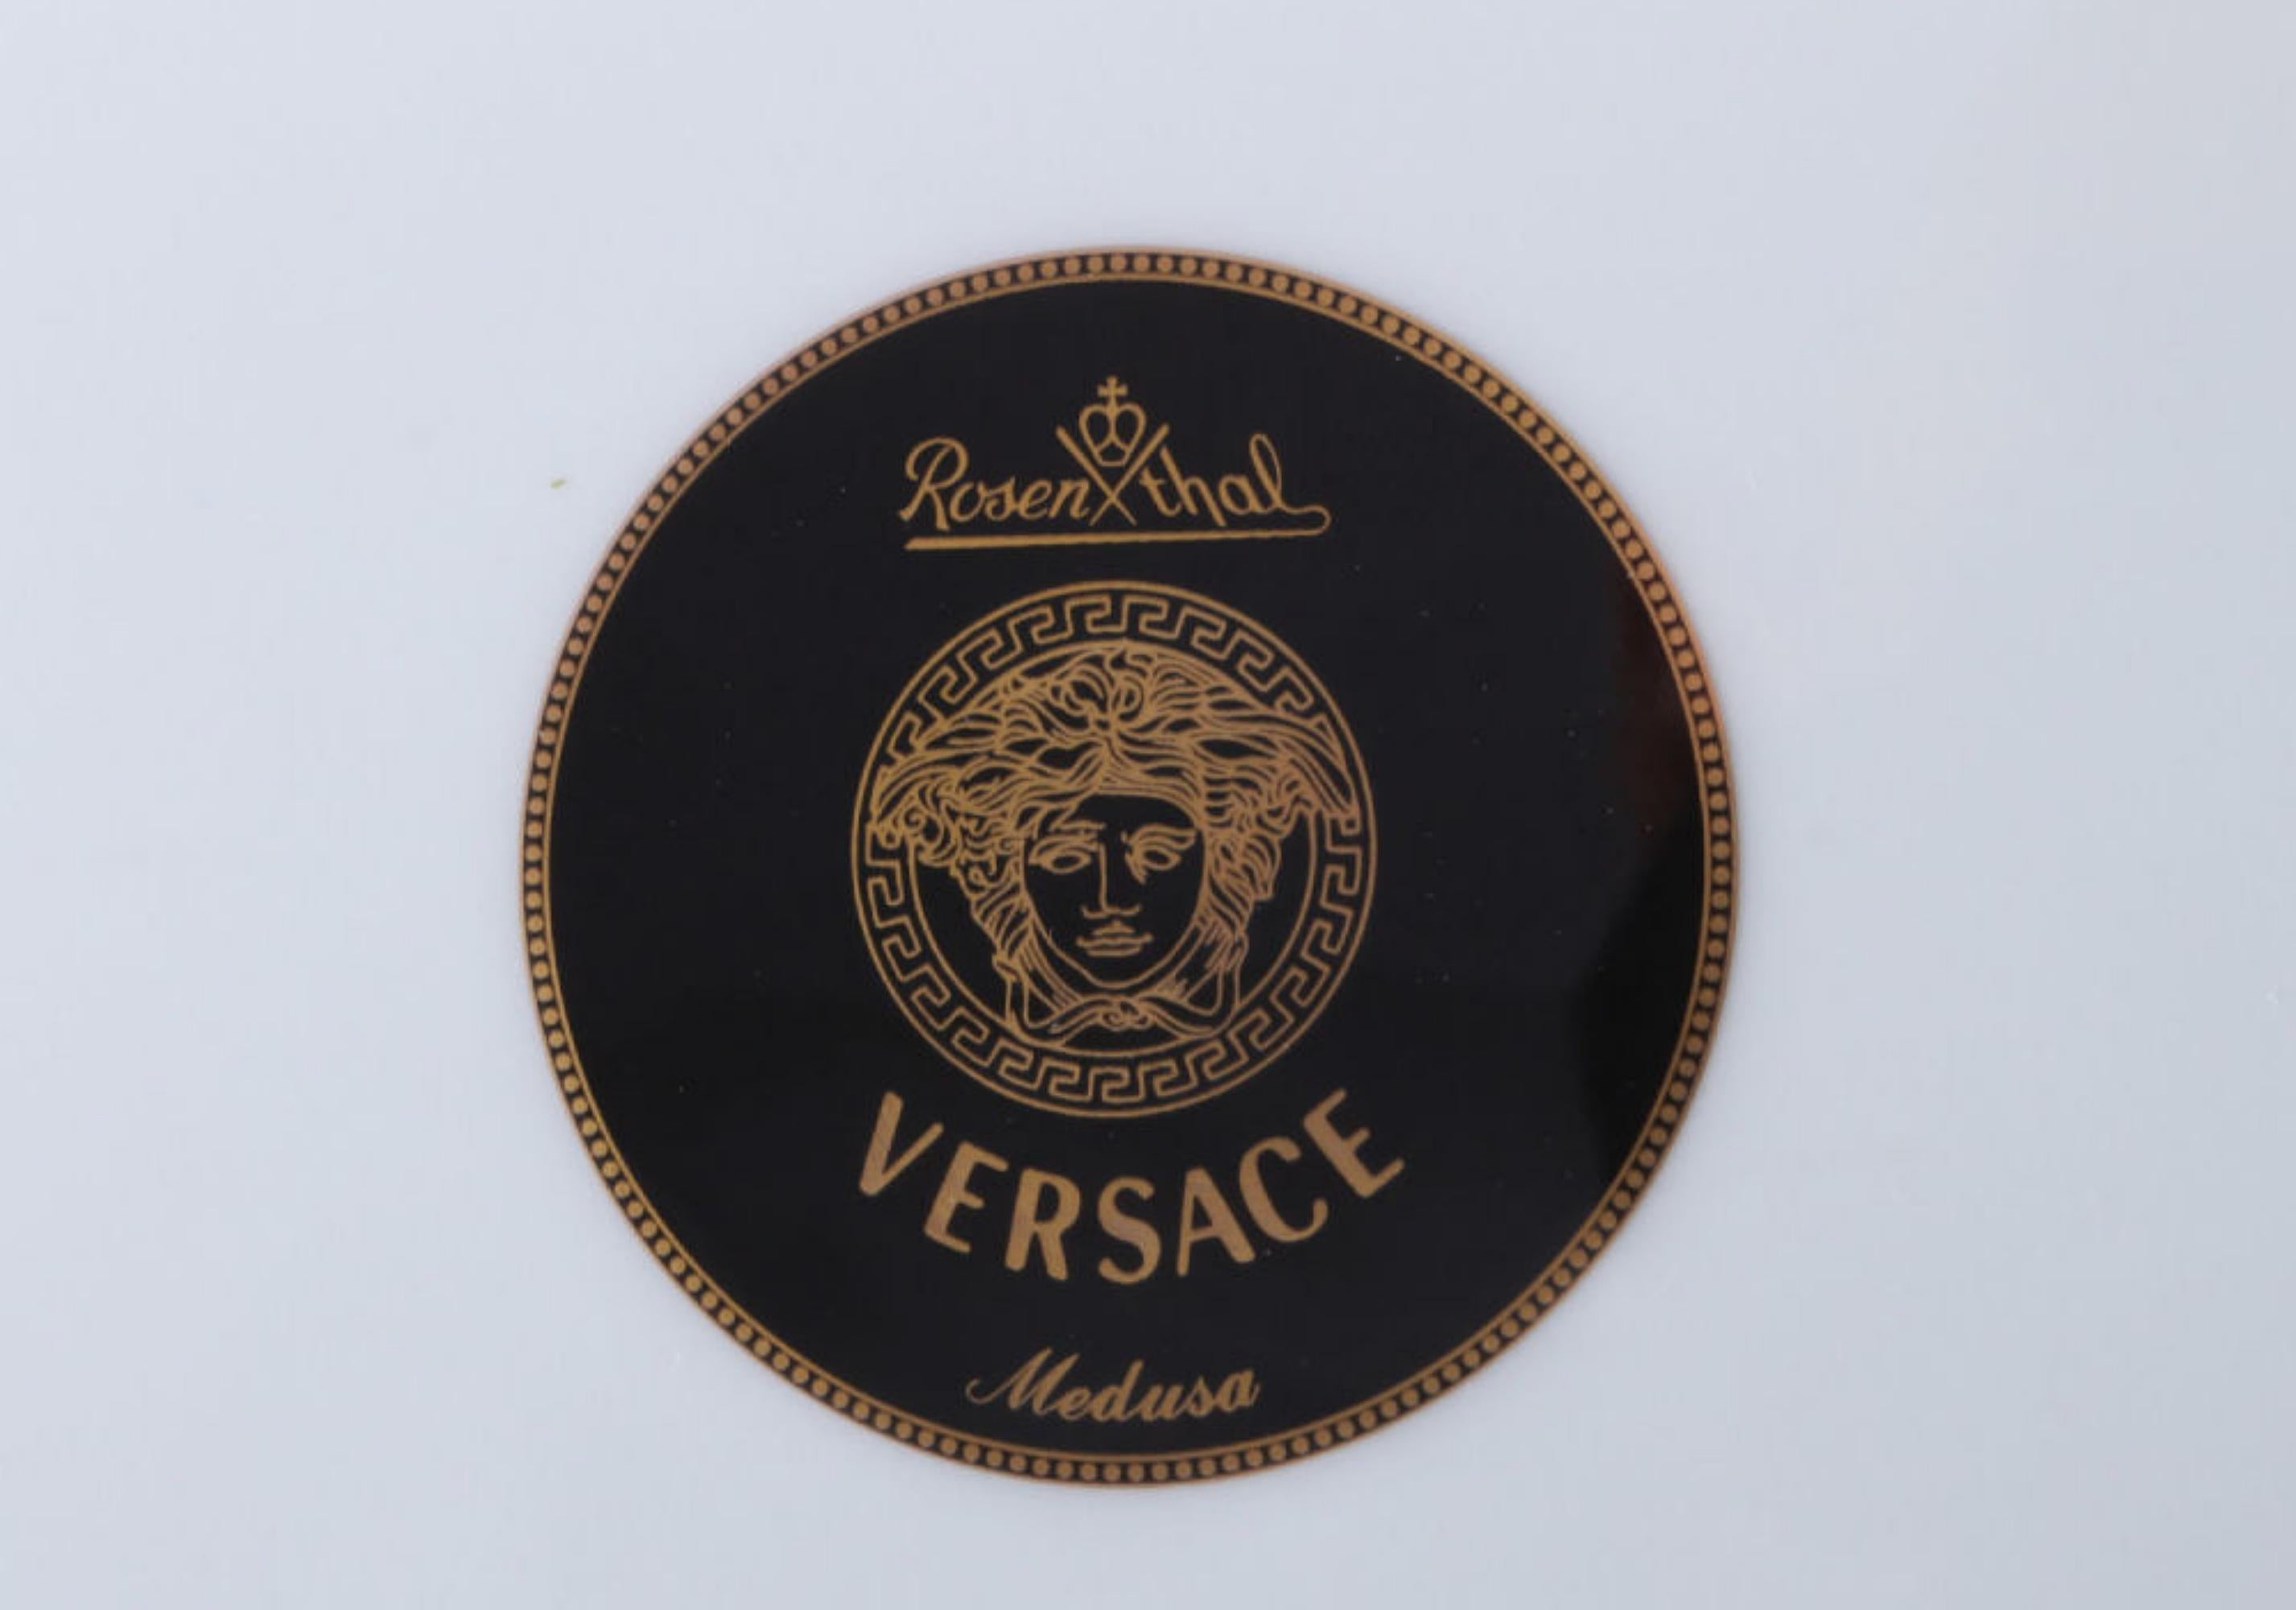 Rosenthal Versace Medusa 6 Speiseteller, dinner plates,
 
porcelain, black/gold company logo, Versace Medusa decoration, Ikarus shape, design Paul Wunderlich (1927-2010), 
6x D 27 cm

very good condition
